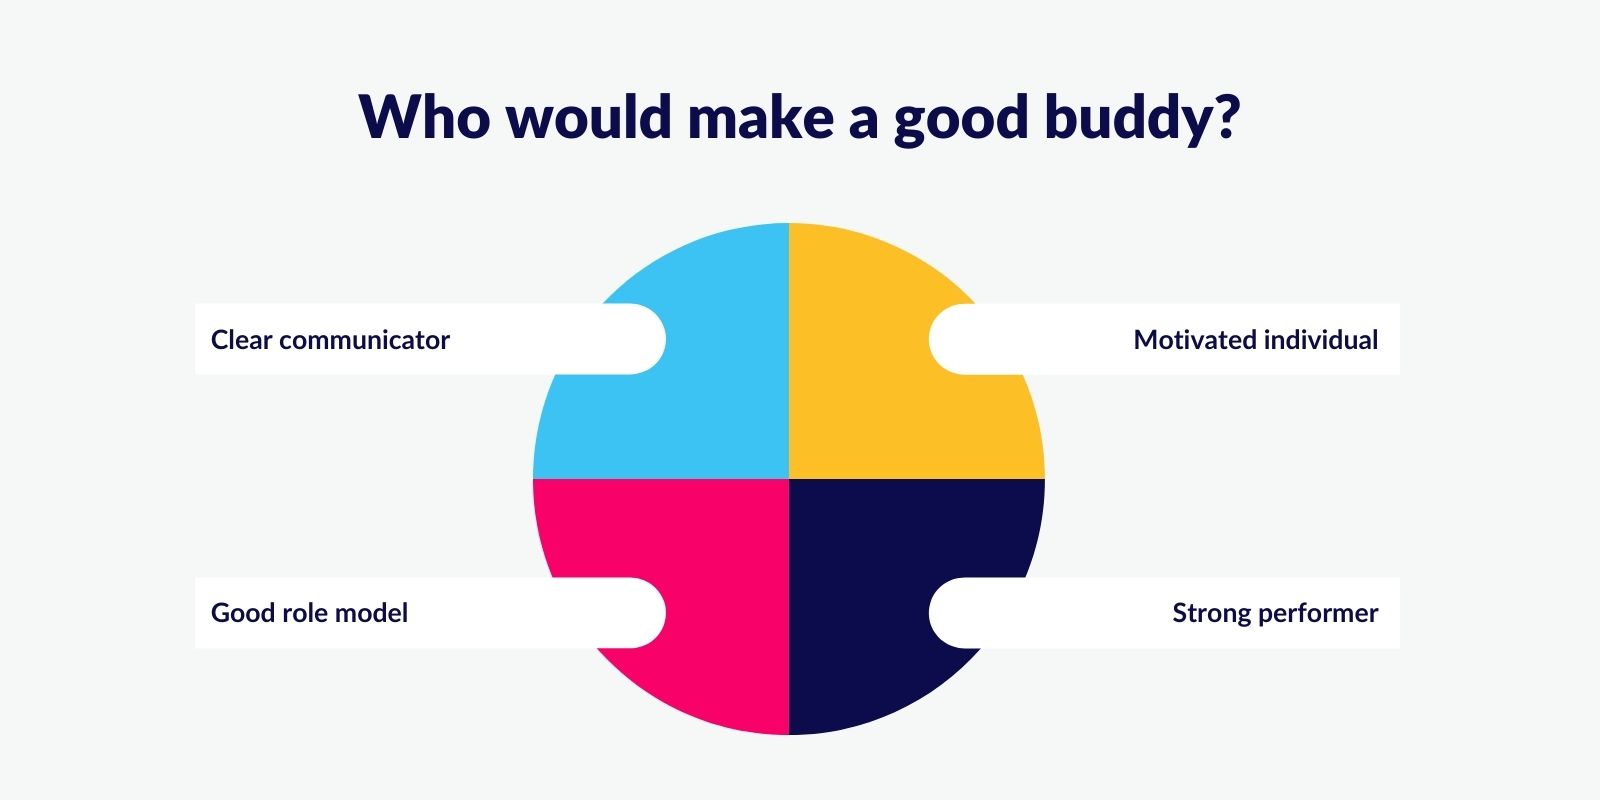 Who would make a good buddy?